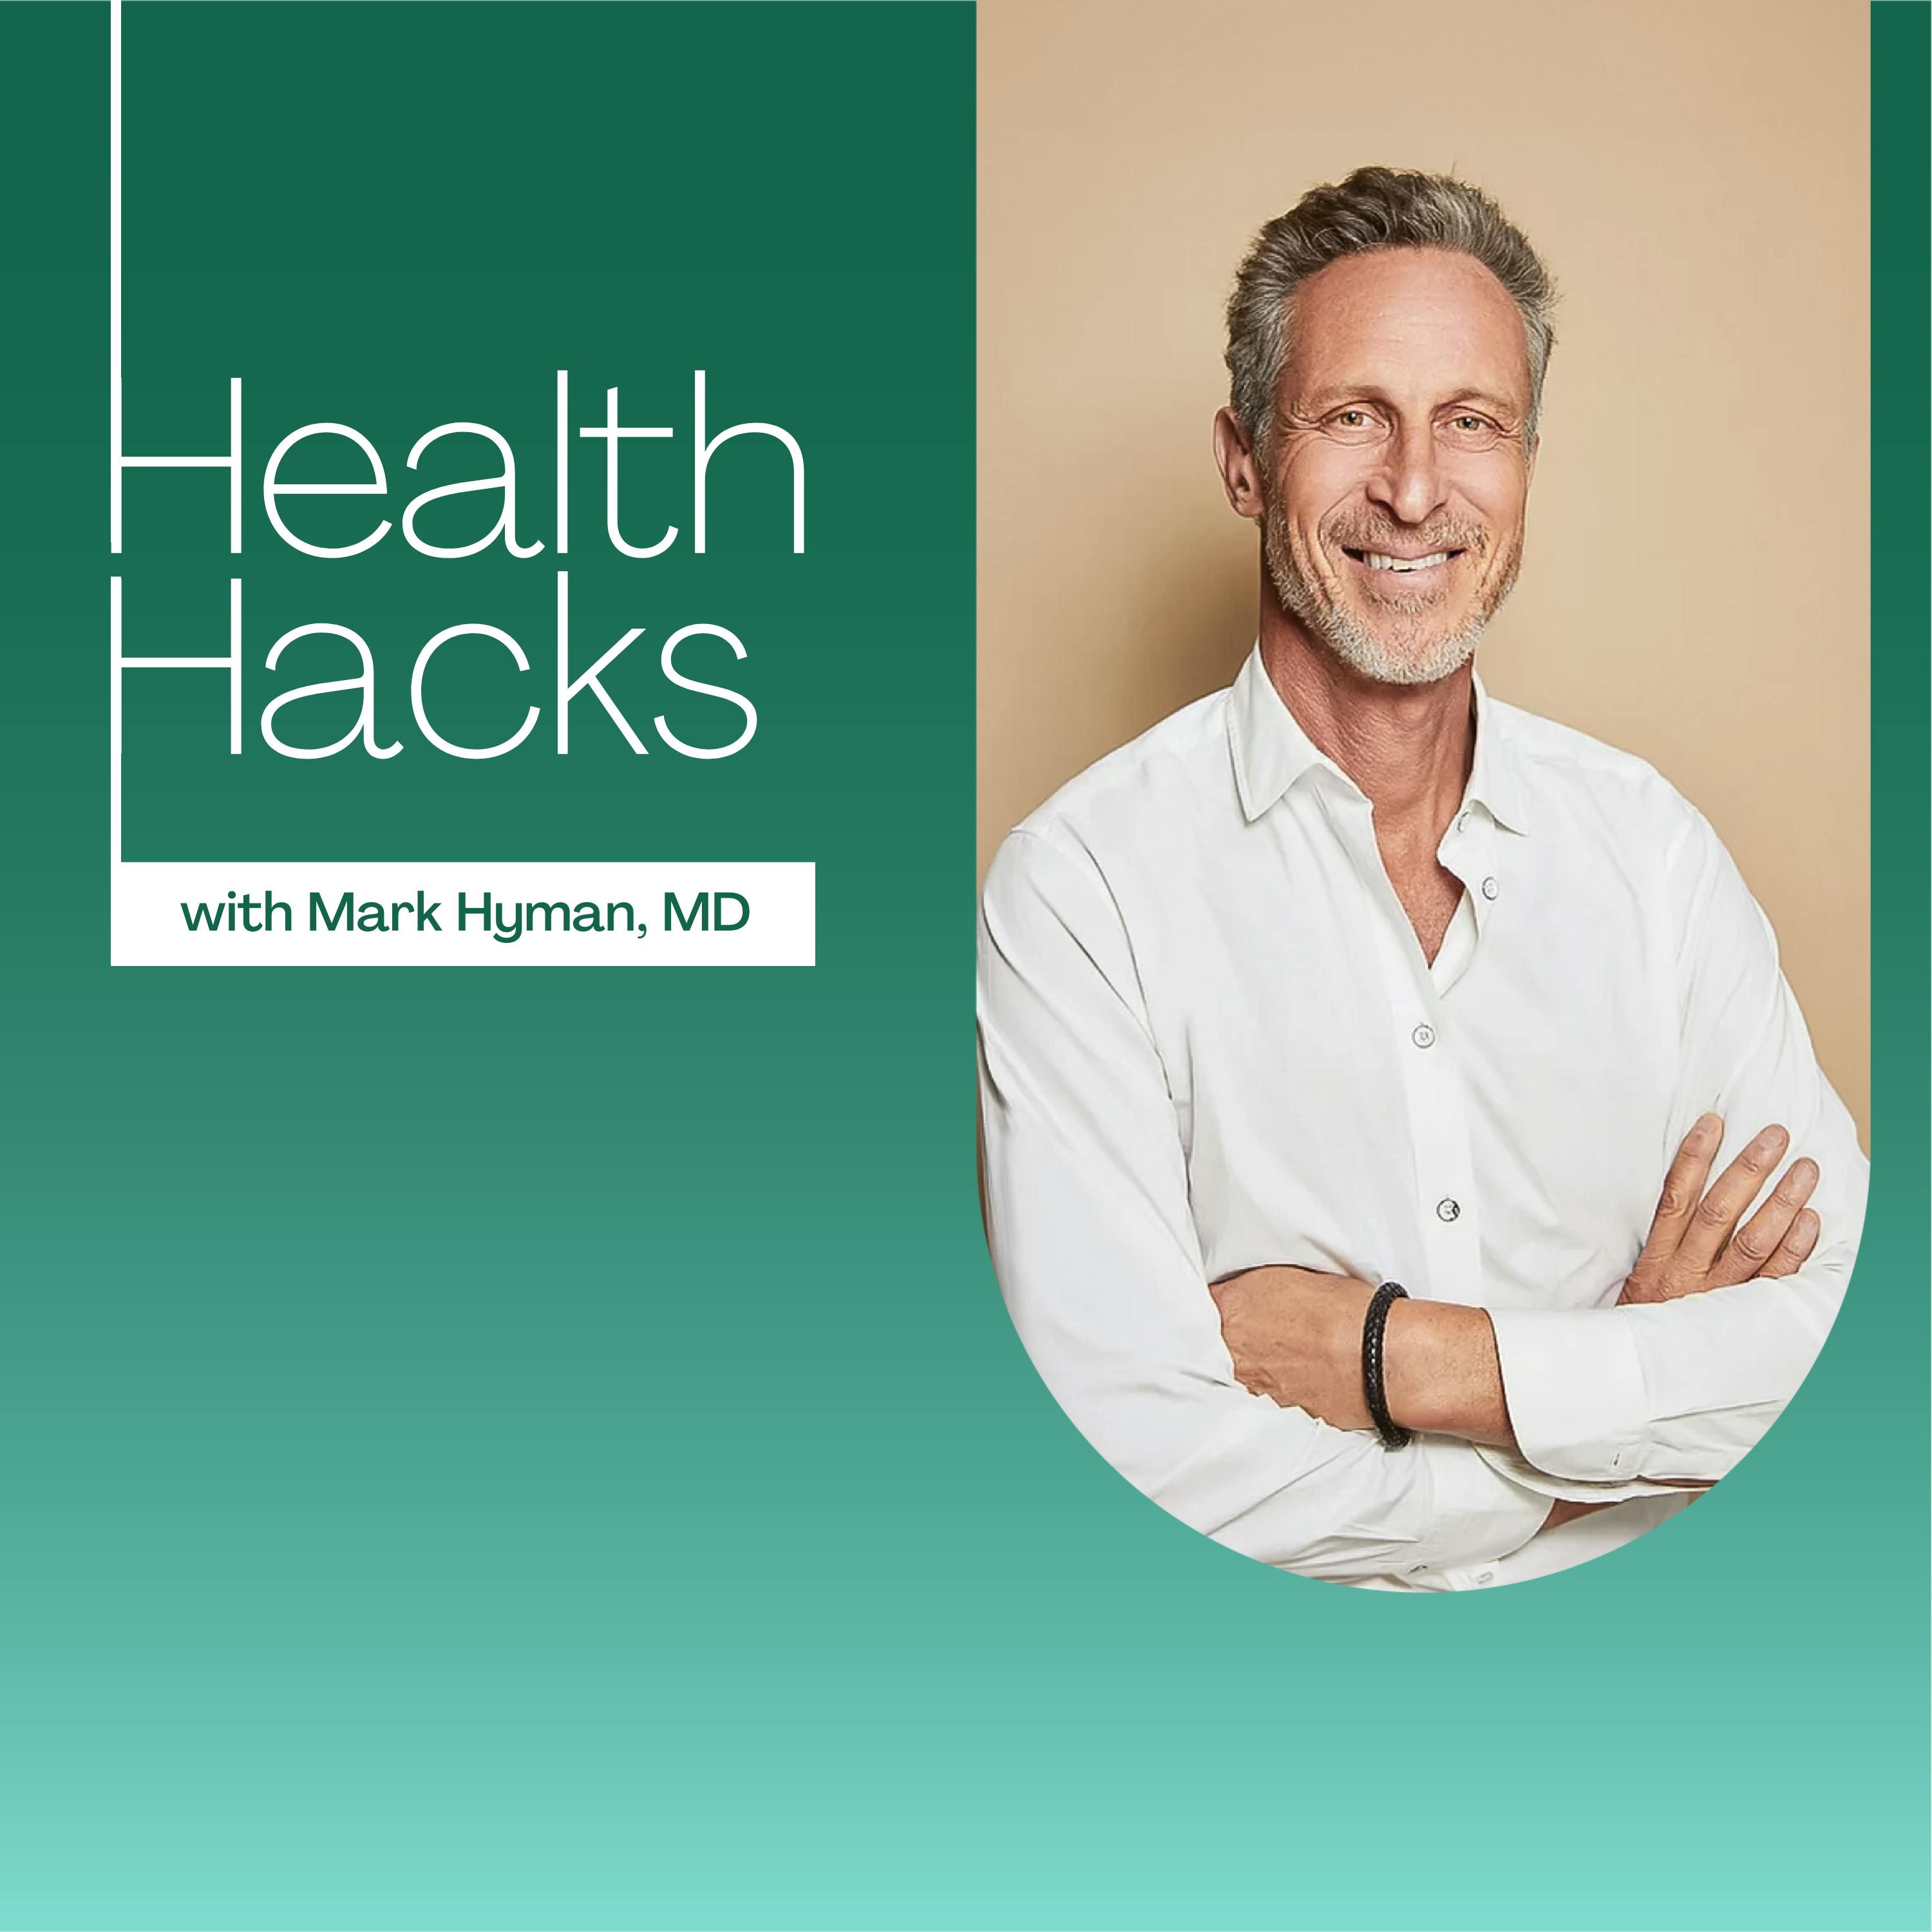 Introducing: Health Hacks with Mark Hyman, M.D.